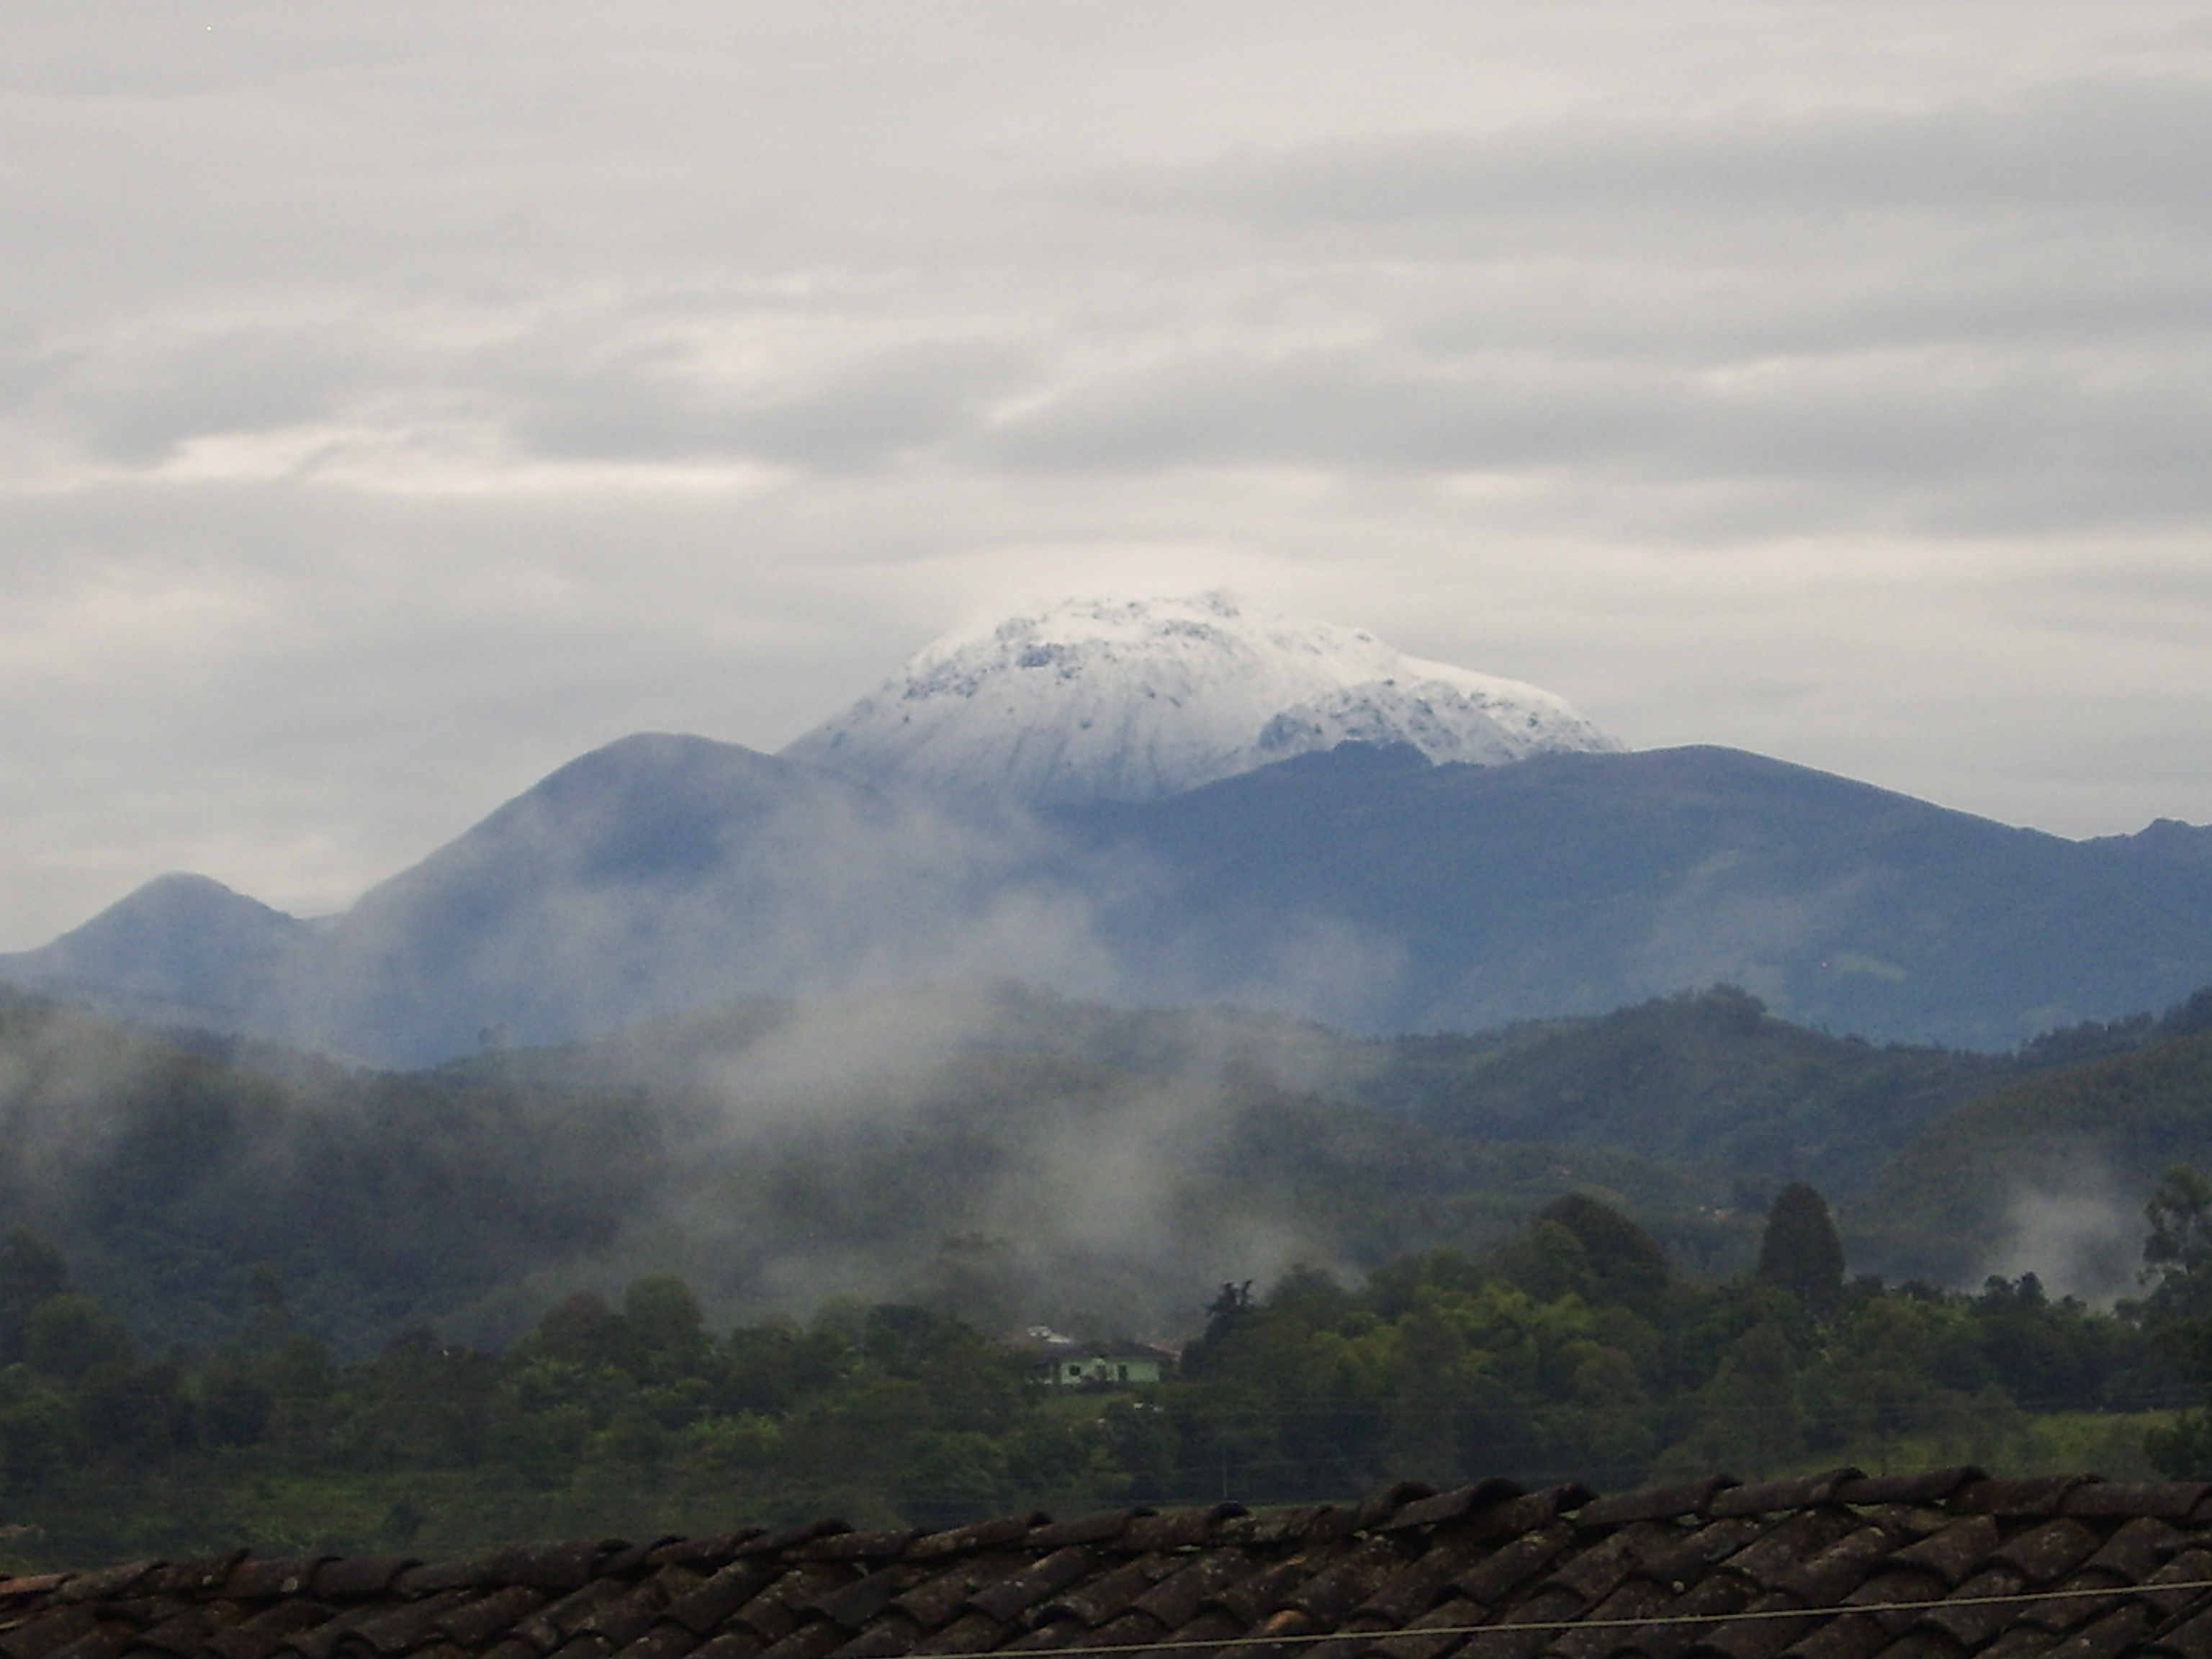 Sotarà volcano in Colombia on orange alert level, 6900 earthquakes since June 24th